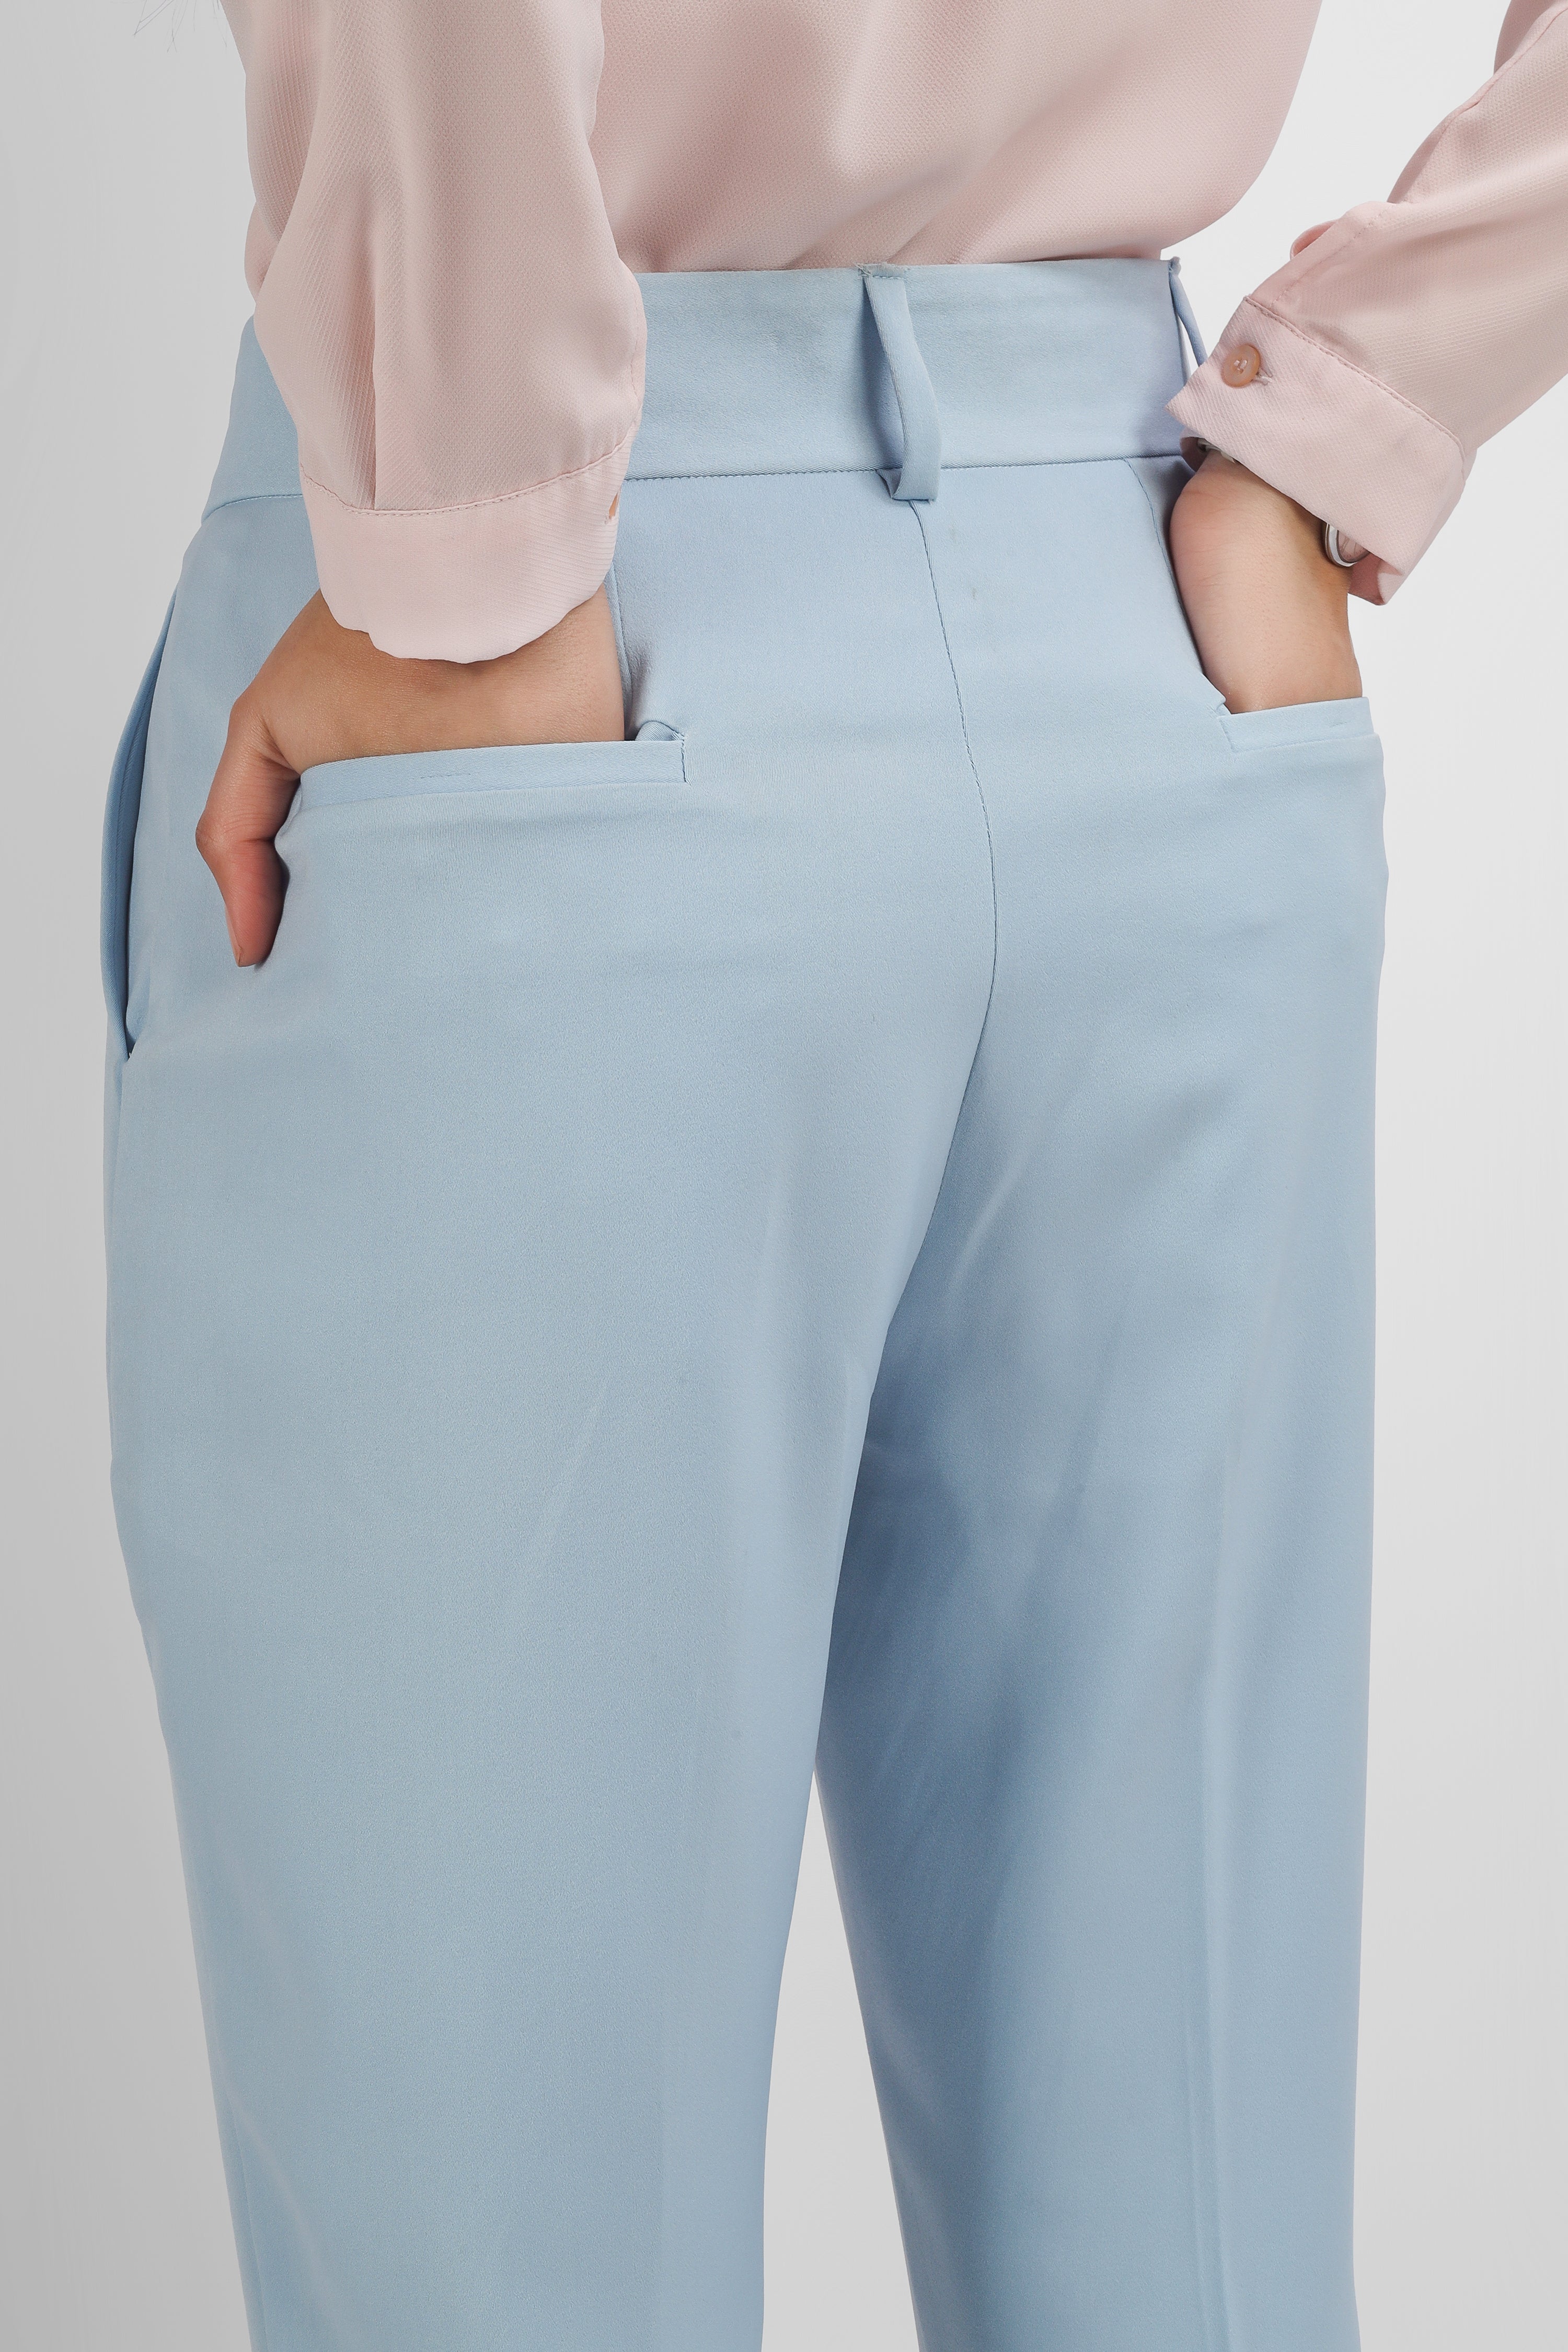 Buy SR Uniform Mens Regular Solid Slim Fit AnkleLength Cotton Trouser  36 Blue at Amazonin